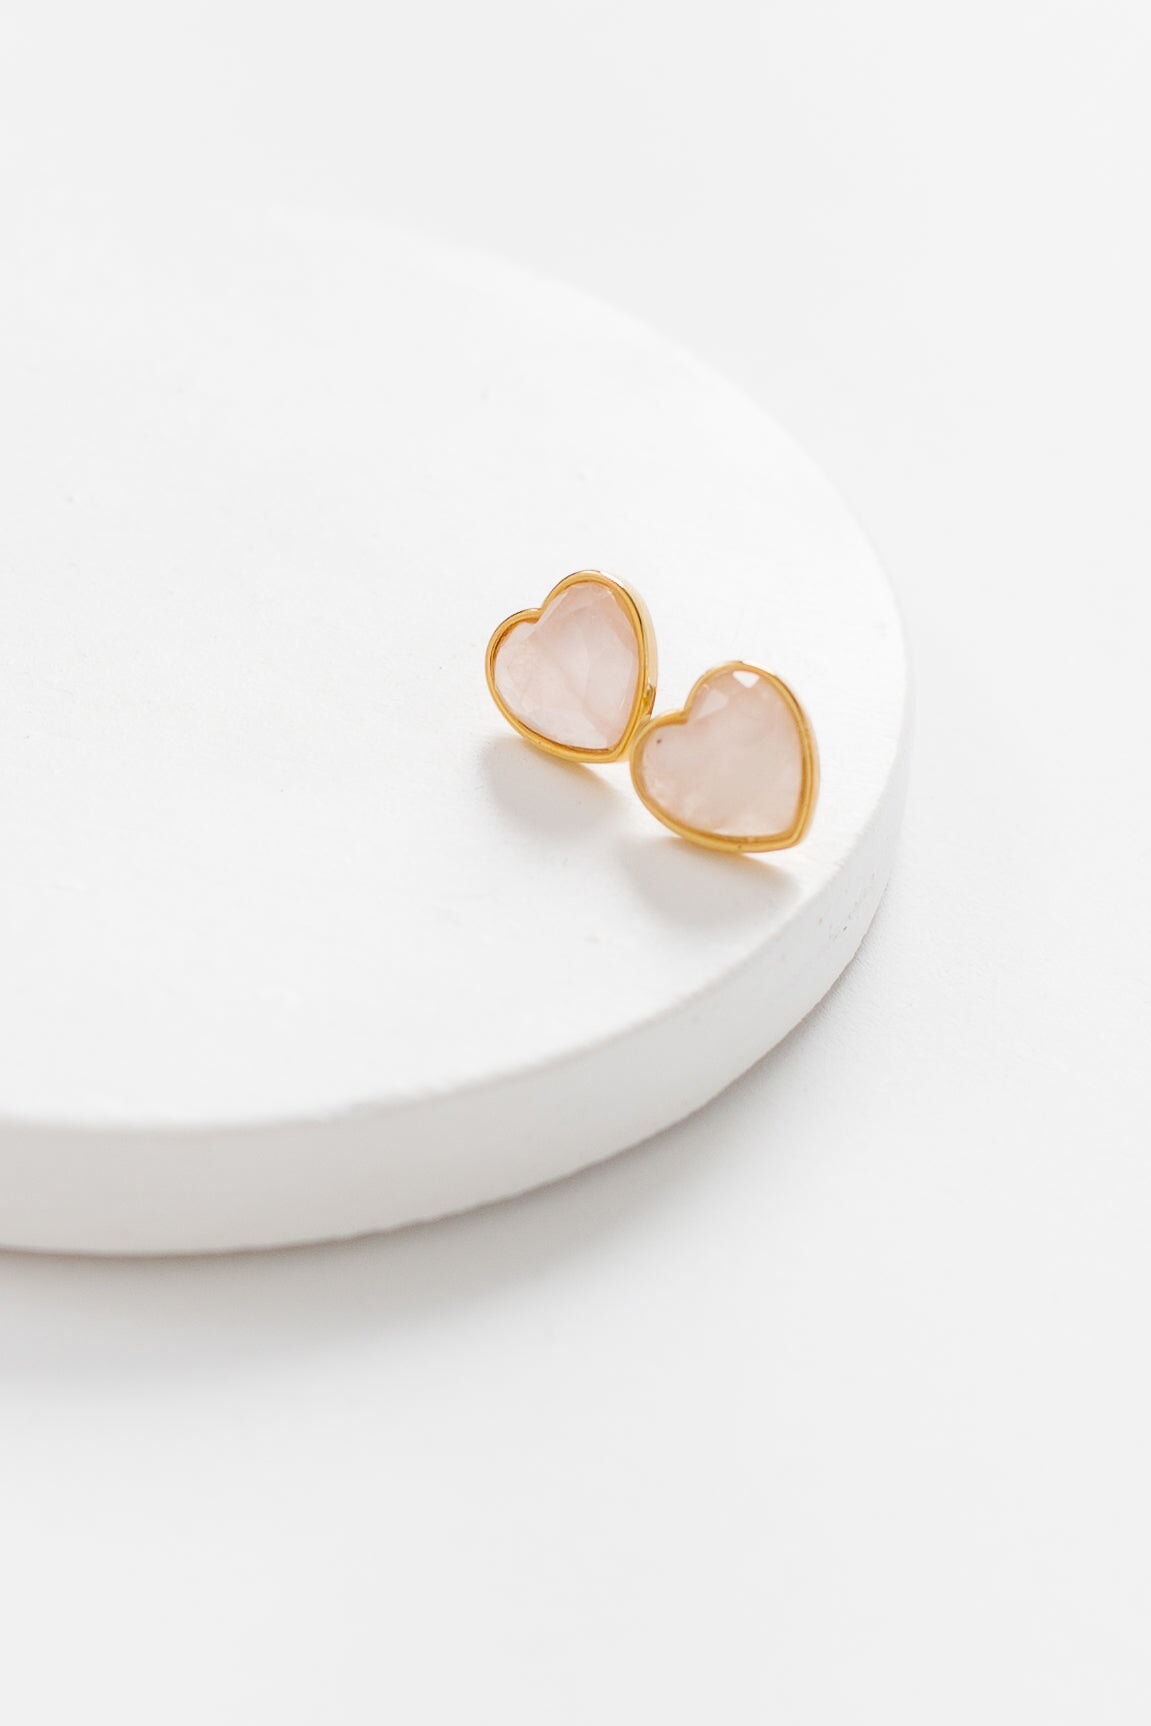 Cove Earrings Rose Quartz Heart Gold WOMEN'S EARINGS Cove Accessories 